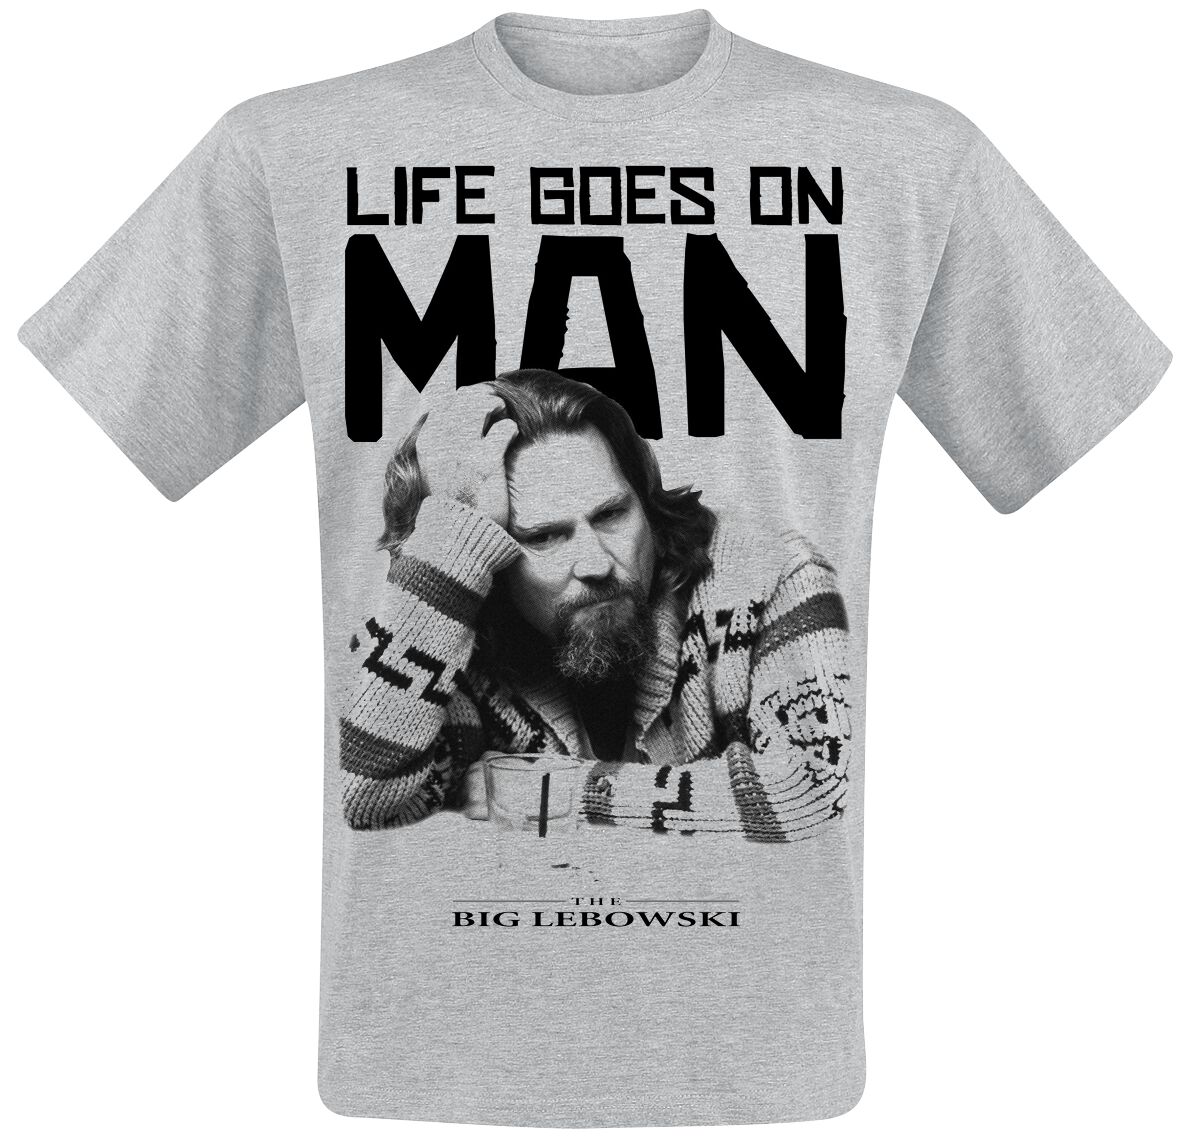 The Big Lebowski Life Goes On Man T-Shirt grau meliert in XXL